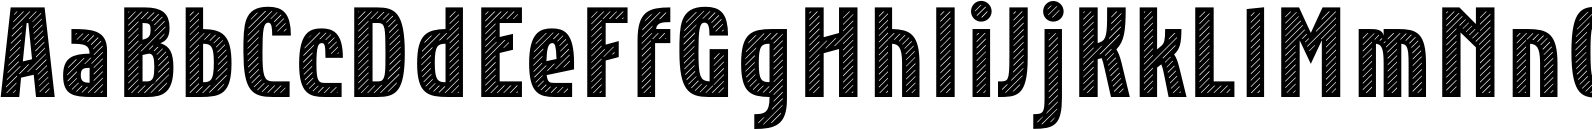 Kamenica Texture One Font OpenType